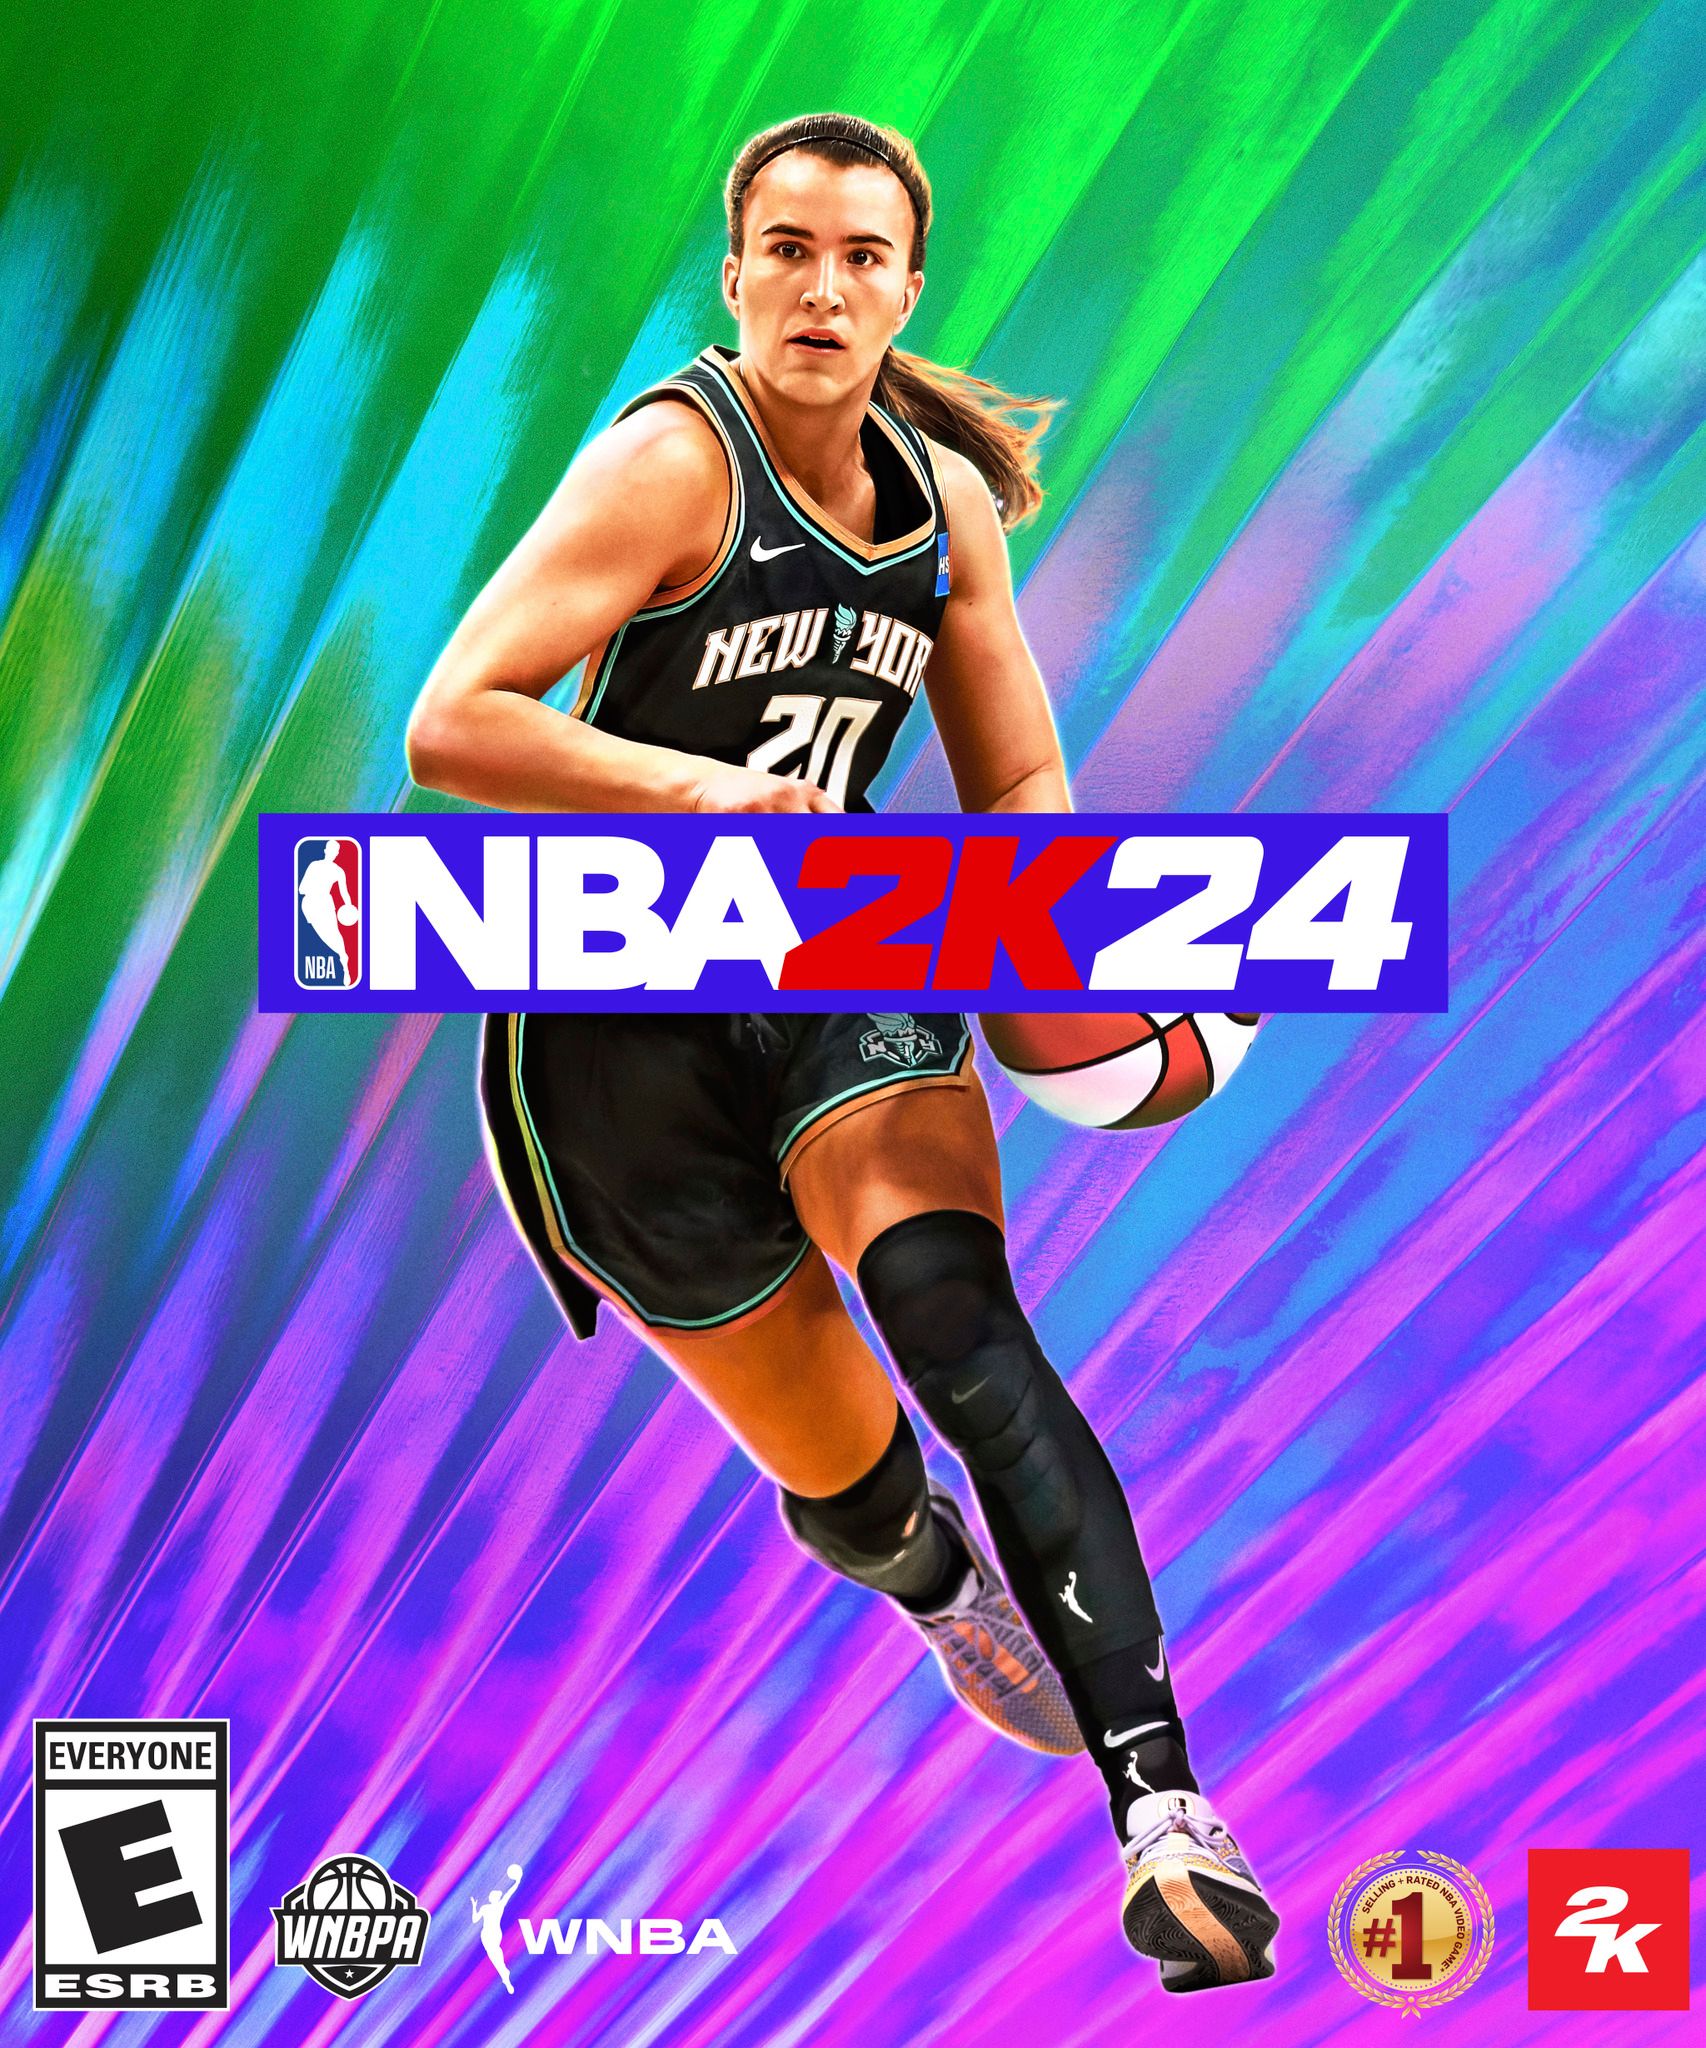 Gambar sampul untuk edisi WNBA NBA 2K24, menampilkan penjaga New York Liberty Sabrina Ionescu berlari dan menggiring bola.